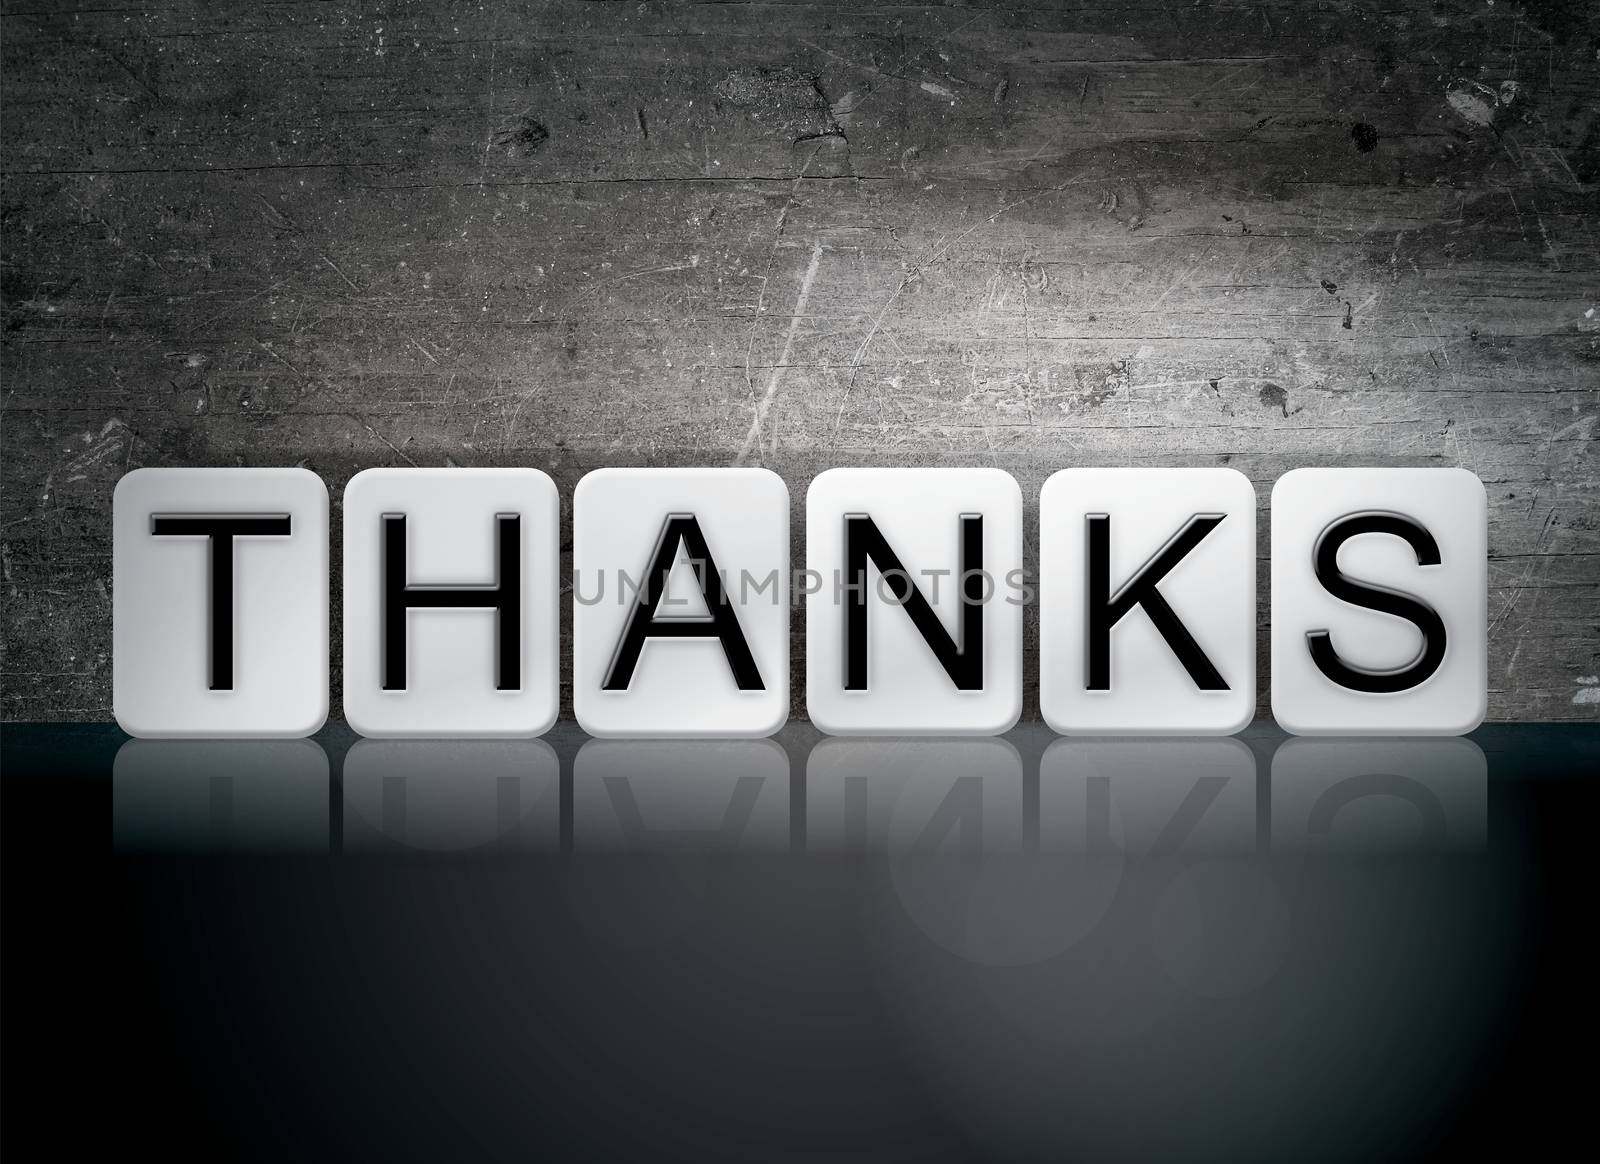 The word "Thanks" written in white tiles against a dark vintage grunge background.